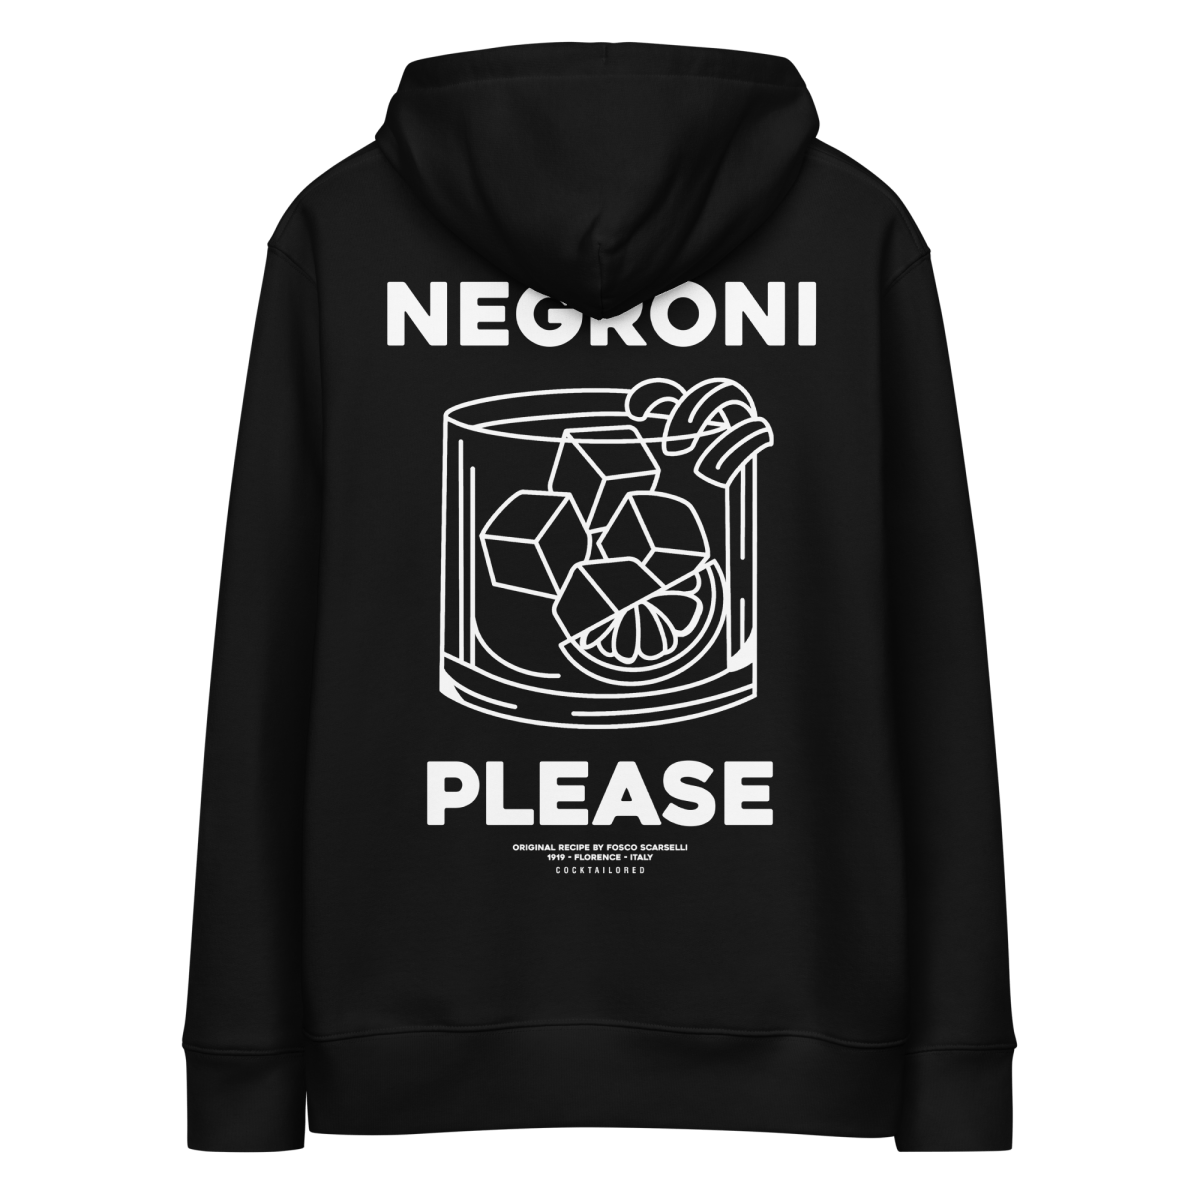 The Negroni Pls. Eco Hoodie